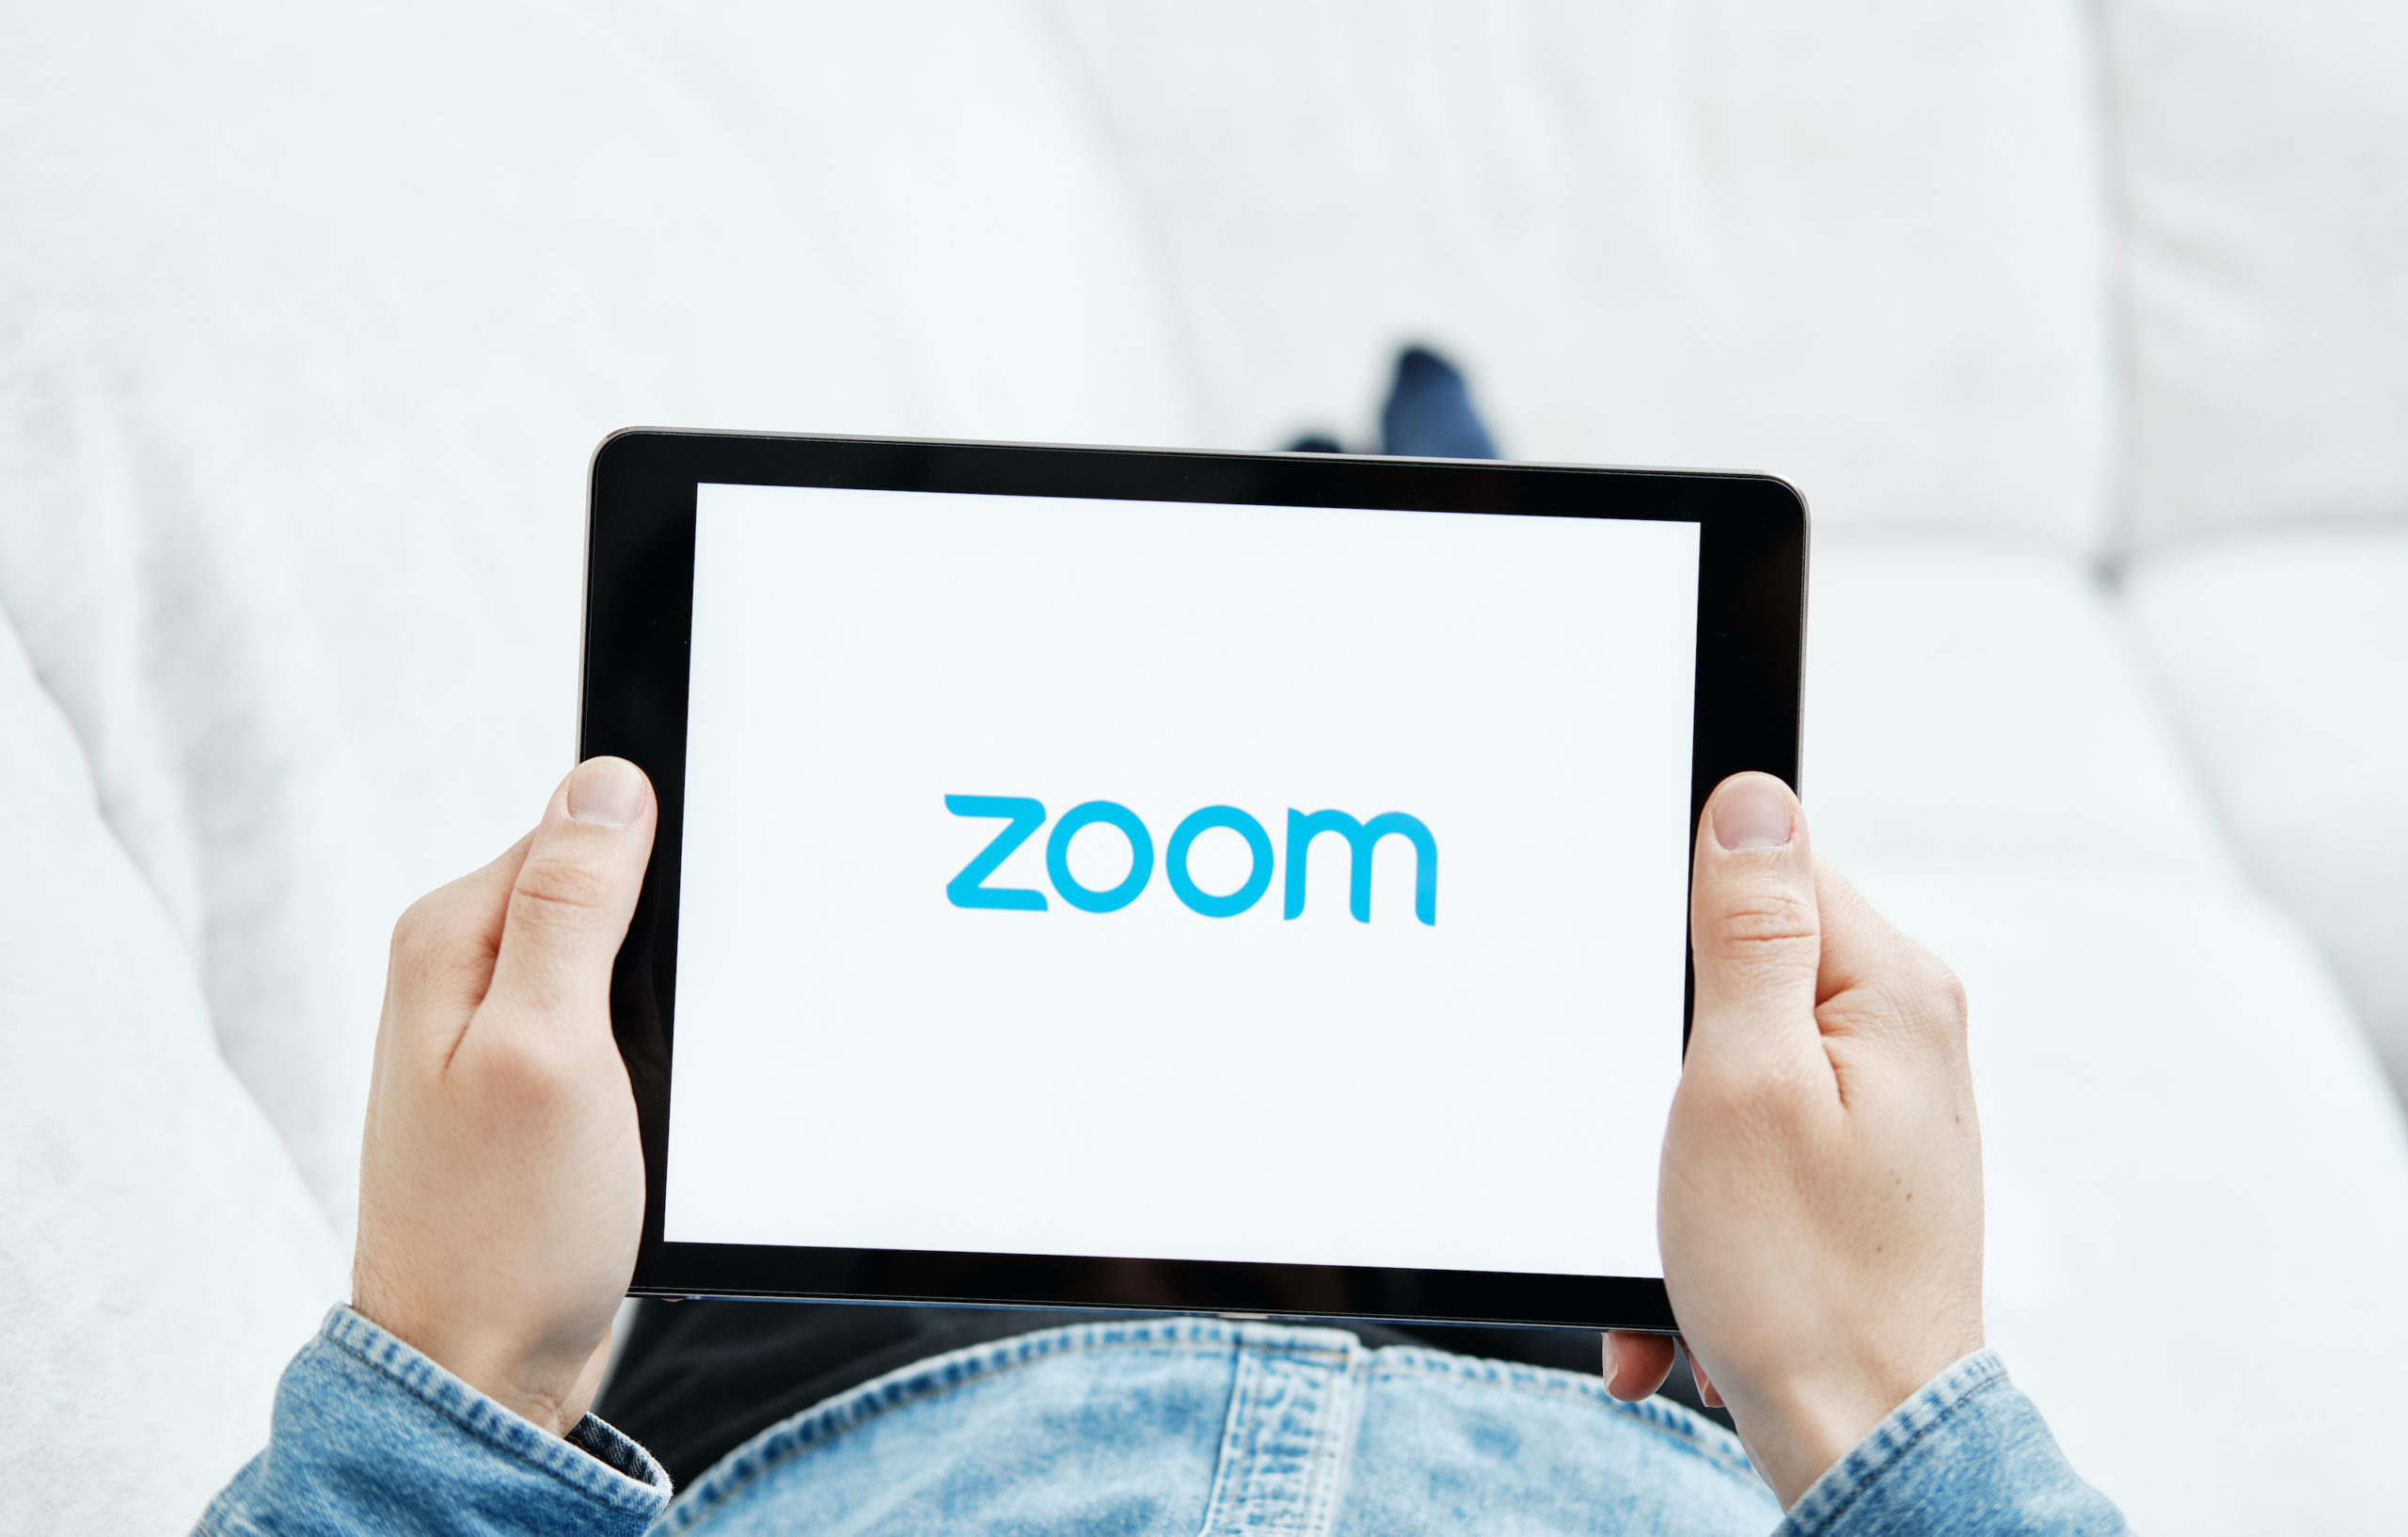 Zoom-bombing is Ruining Online Meetings - Here's How to Avoid It